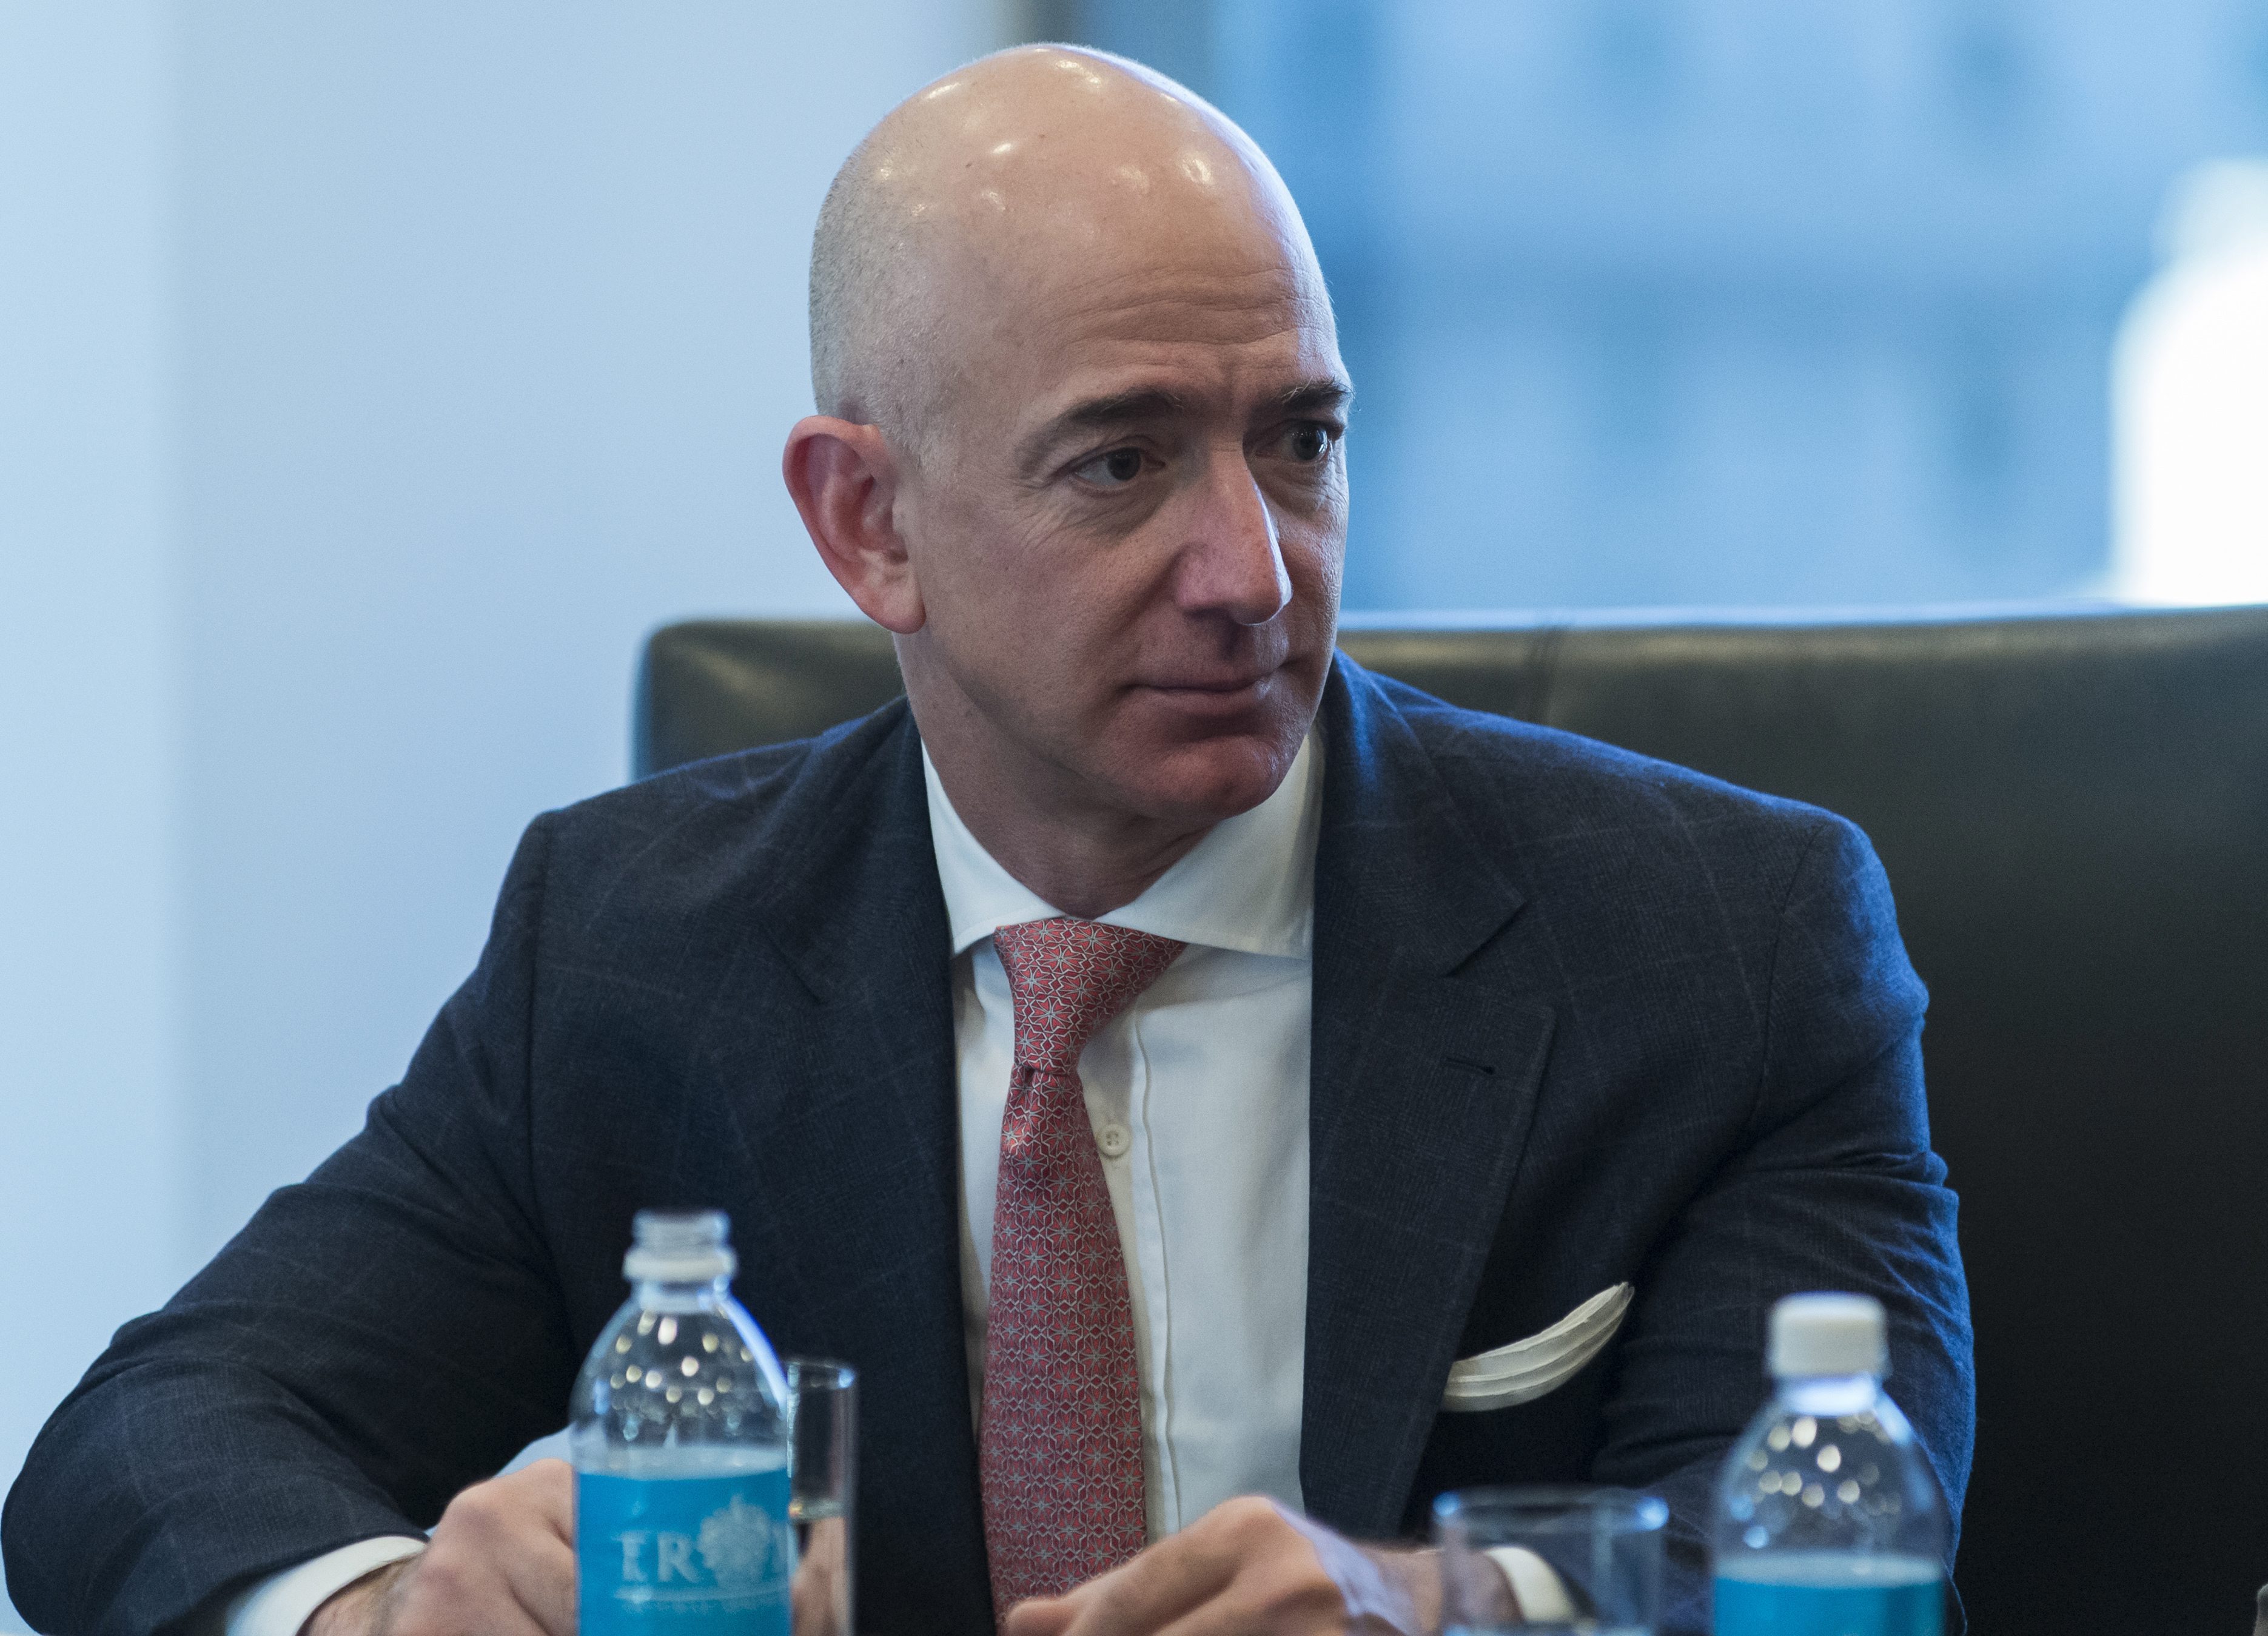 Amazon CEO Jeff Bezos.